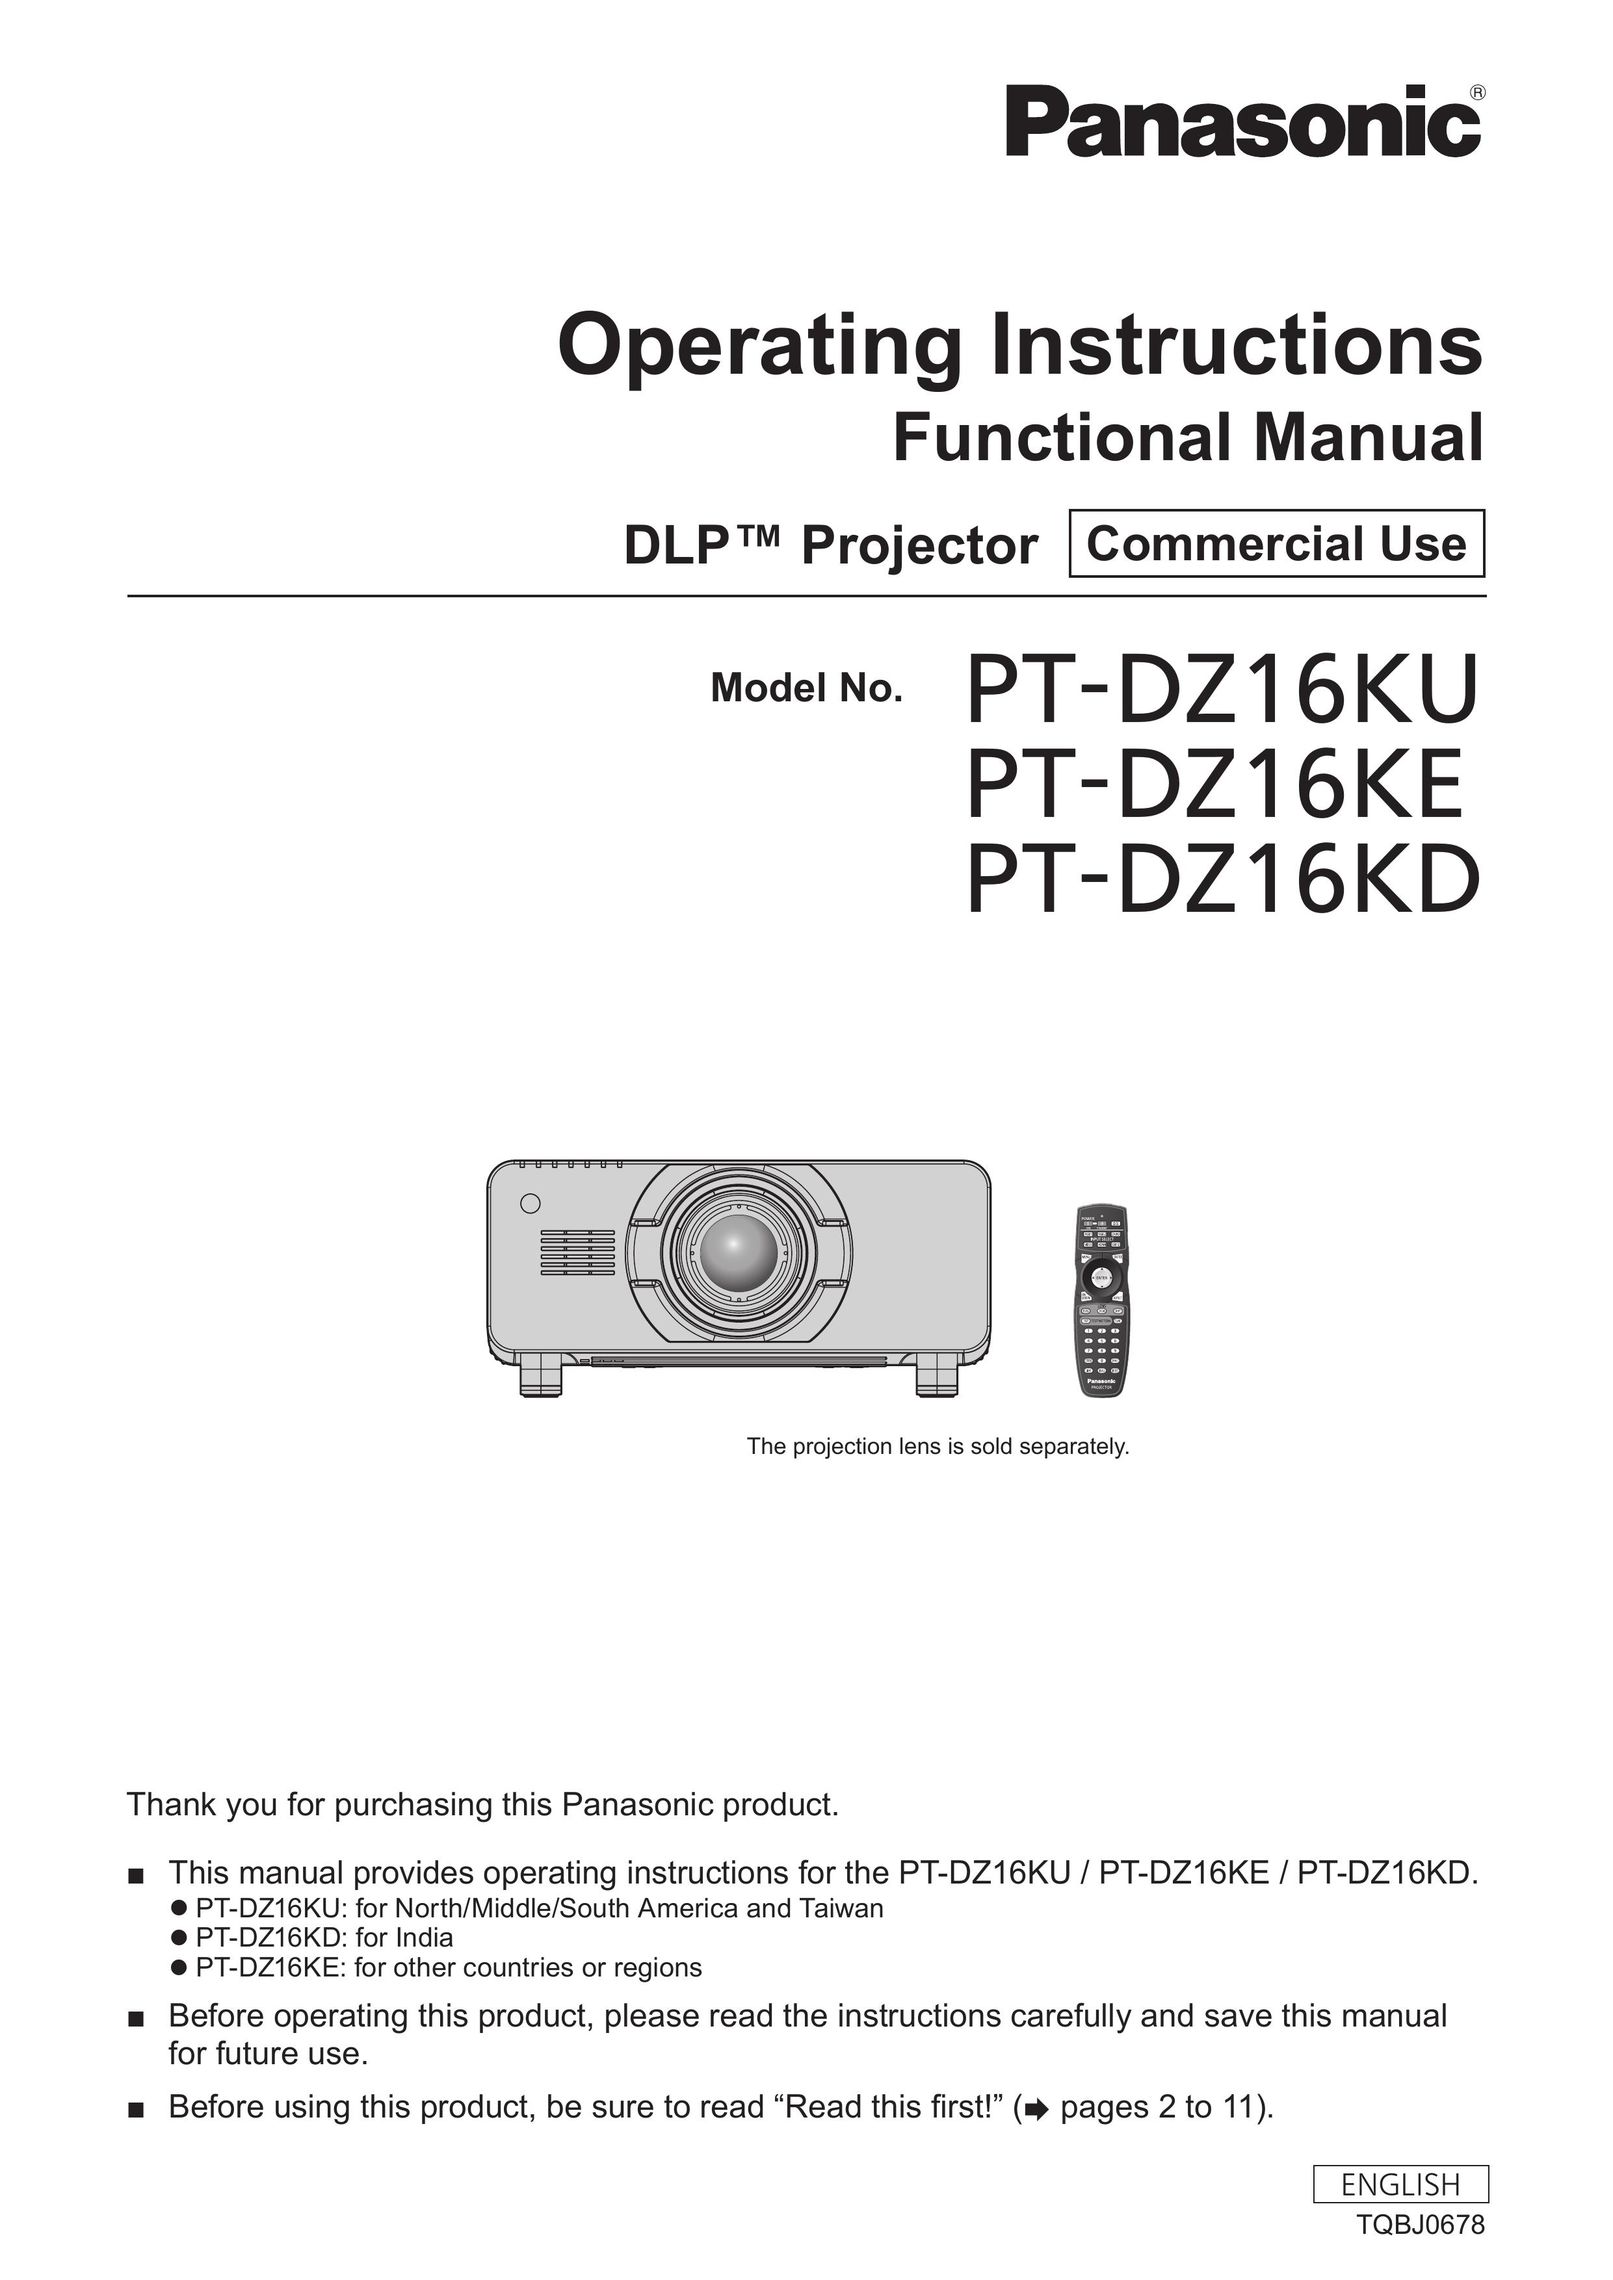 Panasonic PT-DZ16KD Home Theater System User Manual